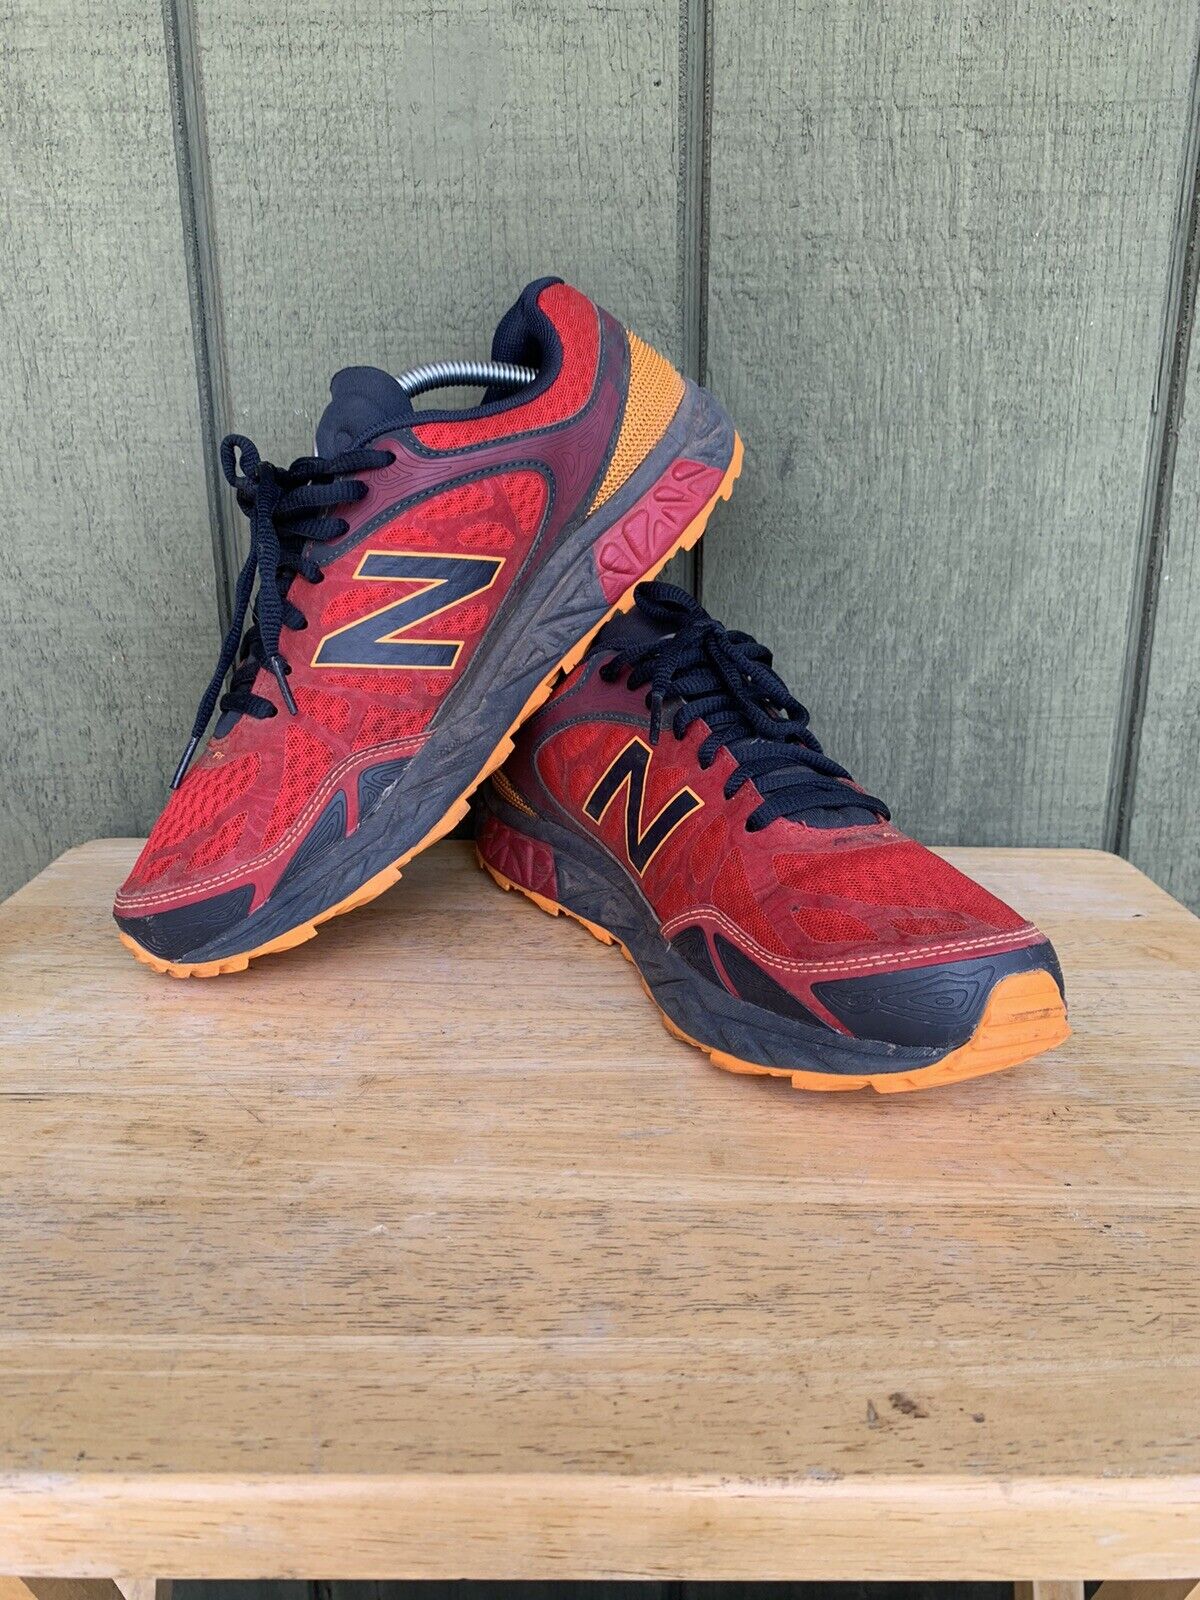 New Balance Trail Running Shoes Sz 9.5 Leadville v3 Off-Road Training | eBay